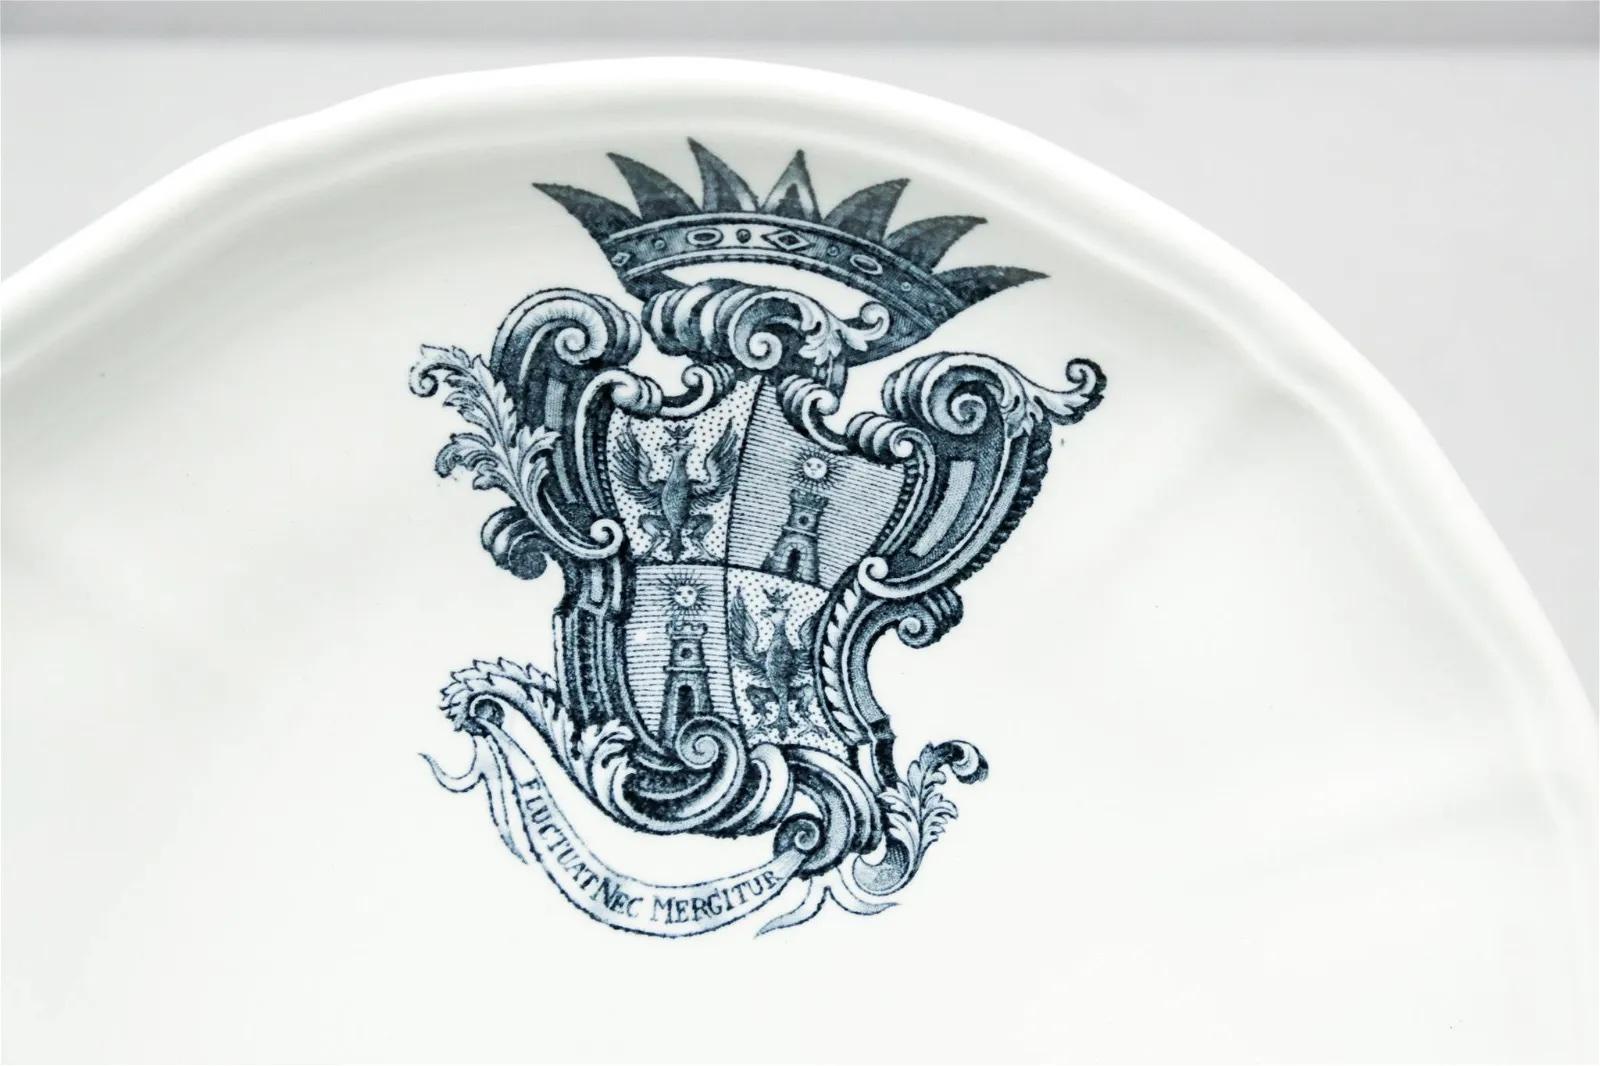 19th century precursor company to Richard Ginori Porcelain. Bearing the motto of the city of Paris, 